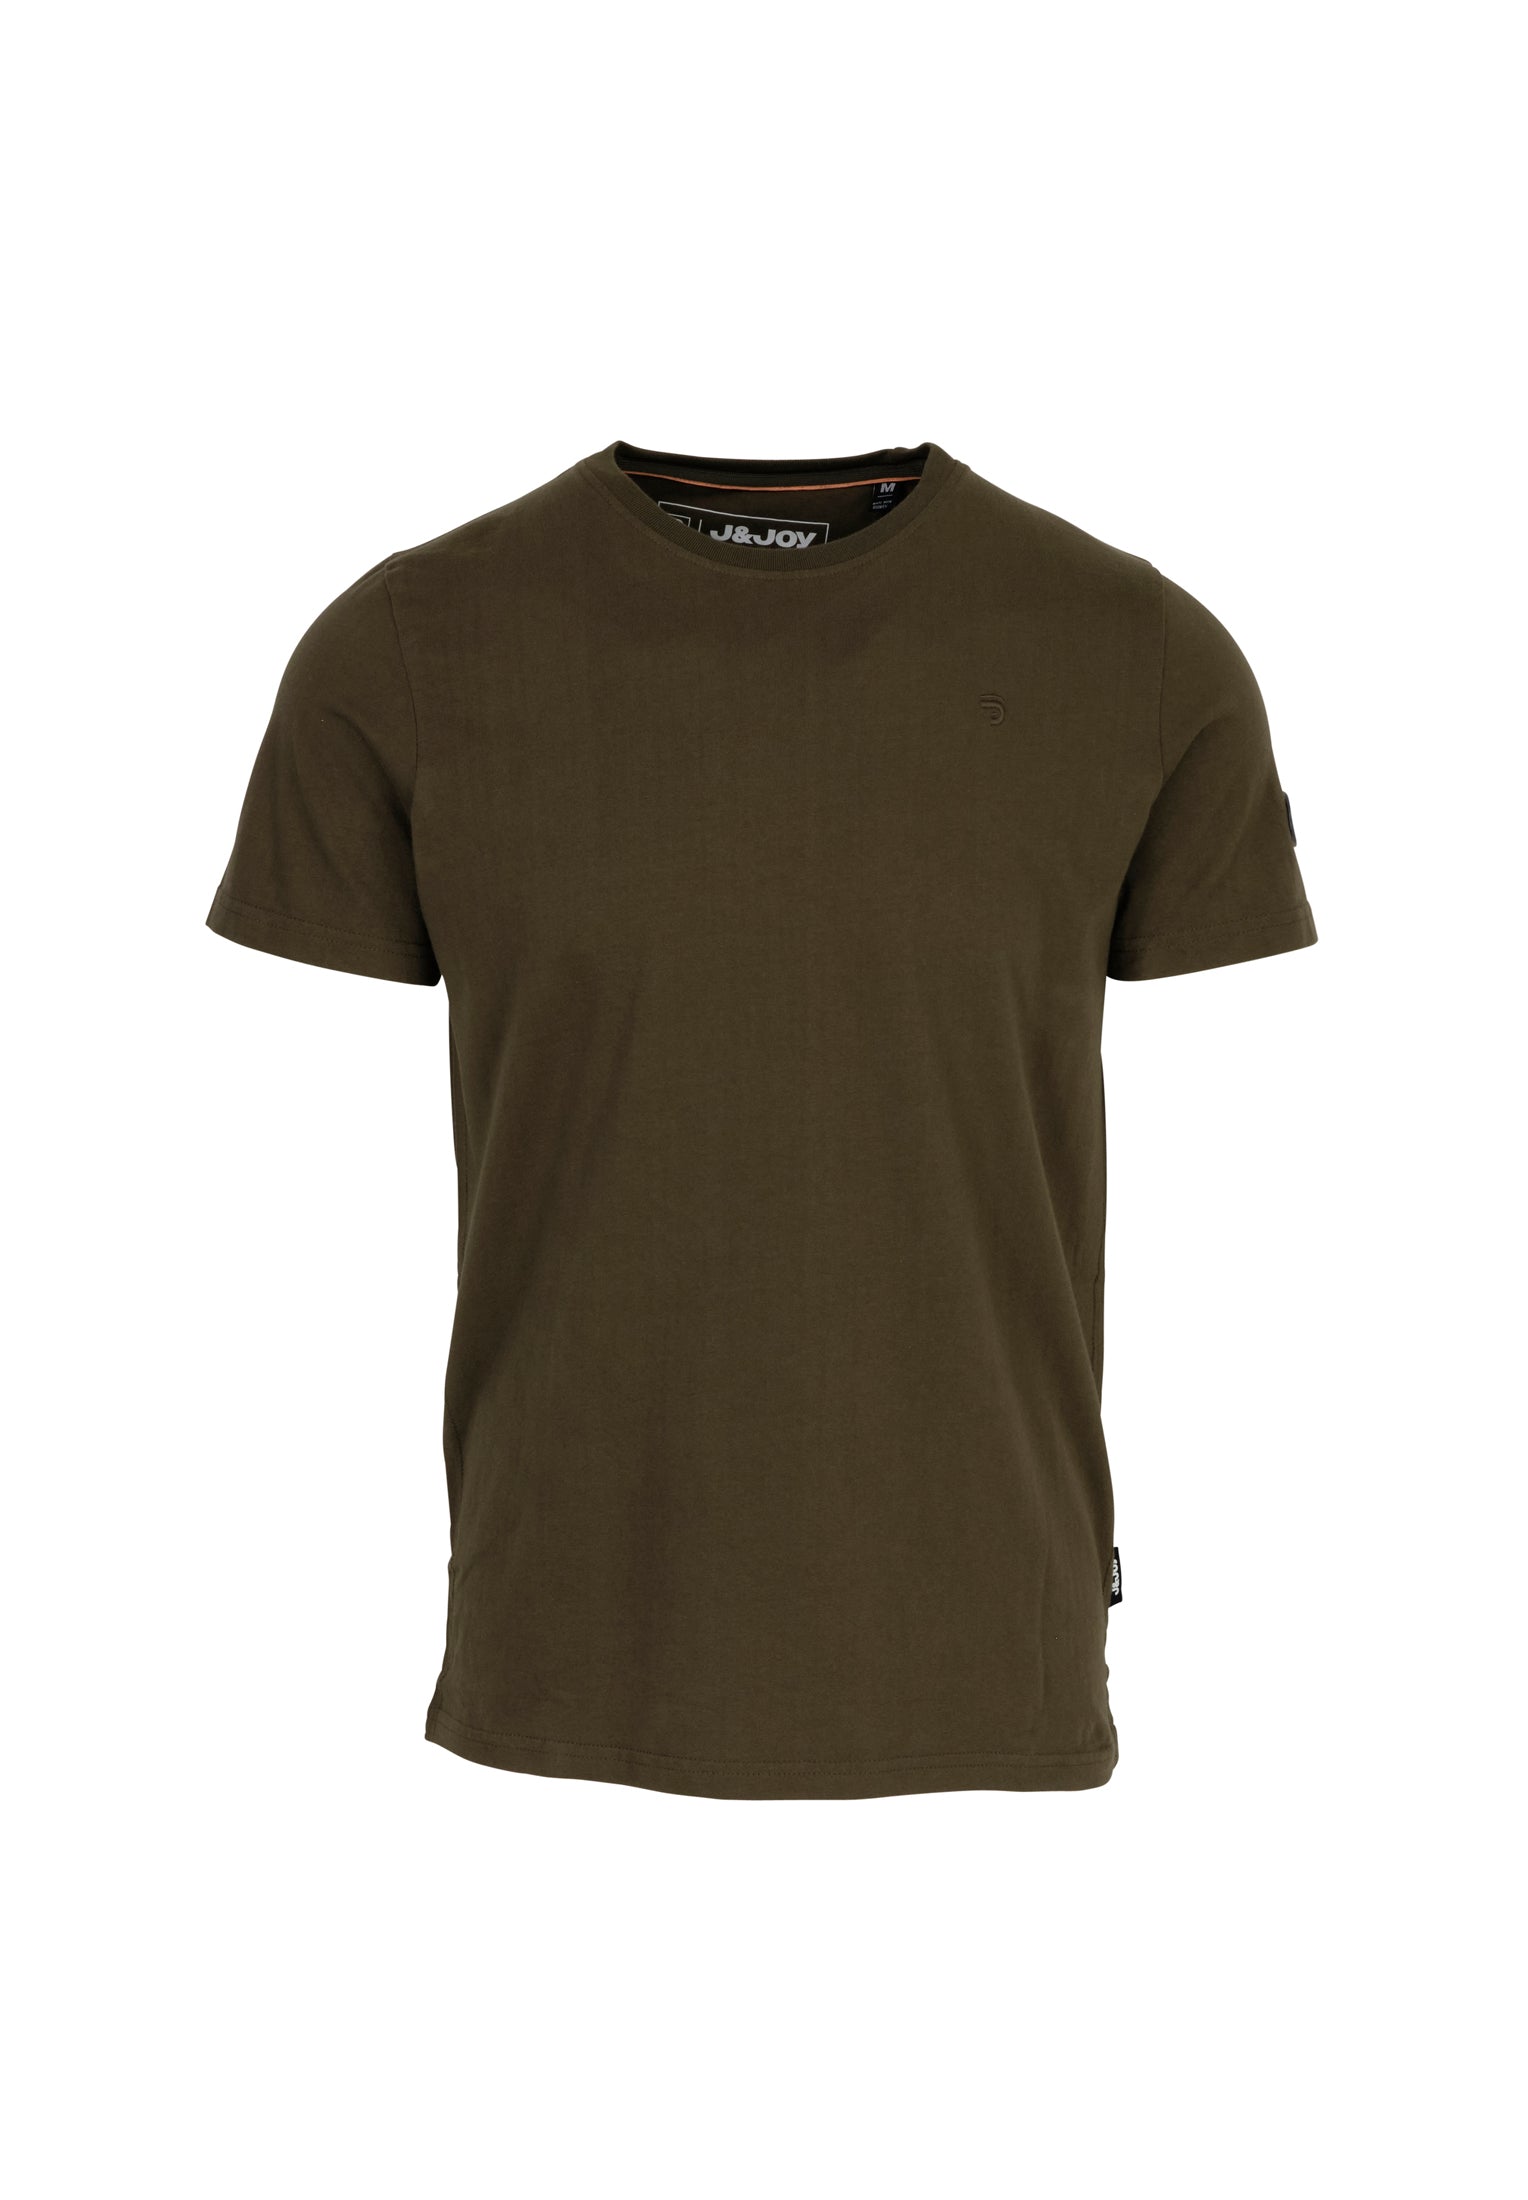 T-Shirt Homme Essentials 01 Green Olive | J&JOY.